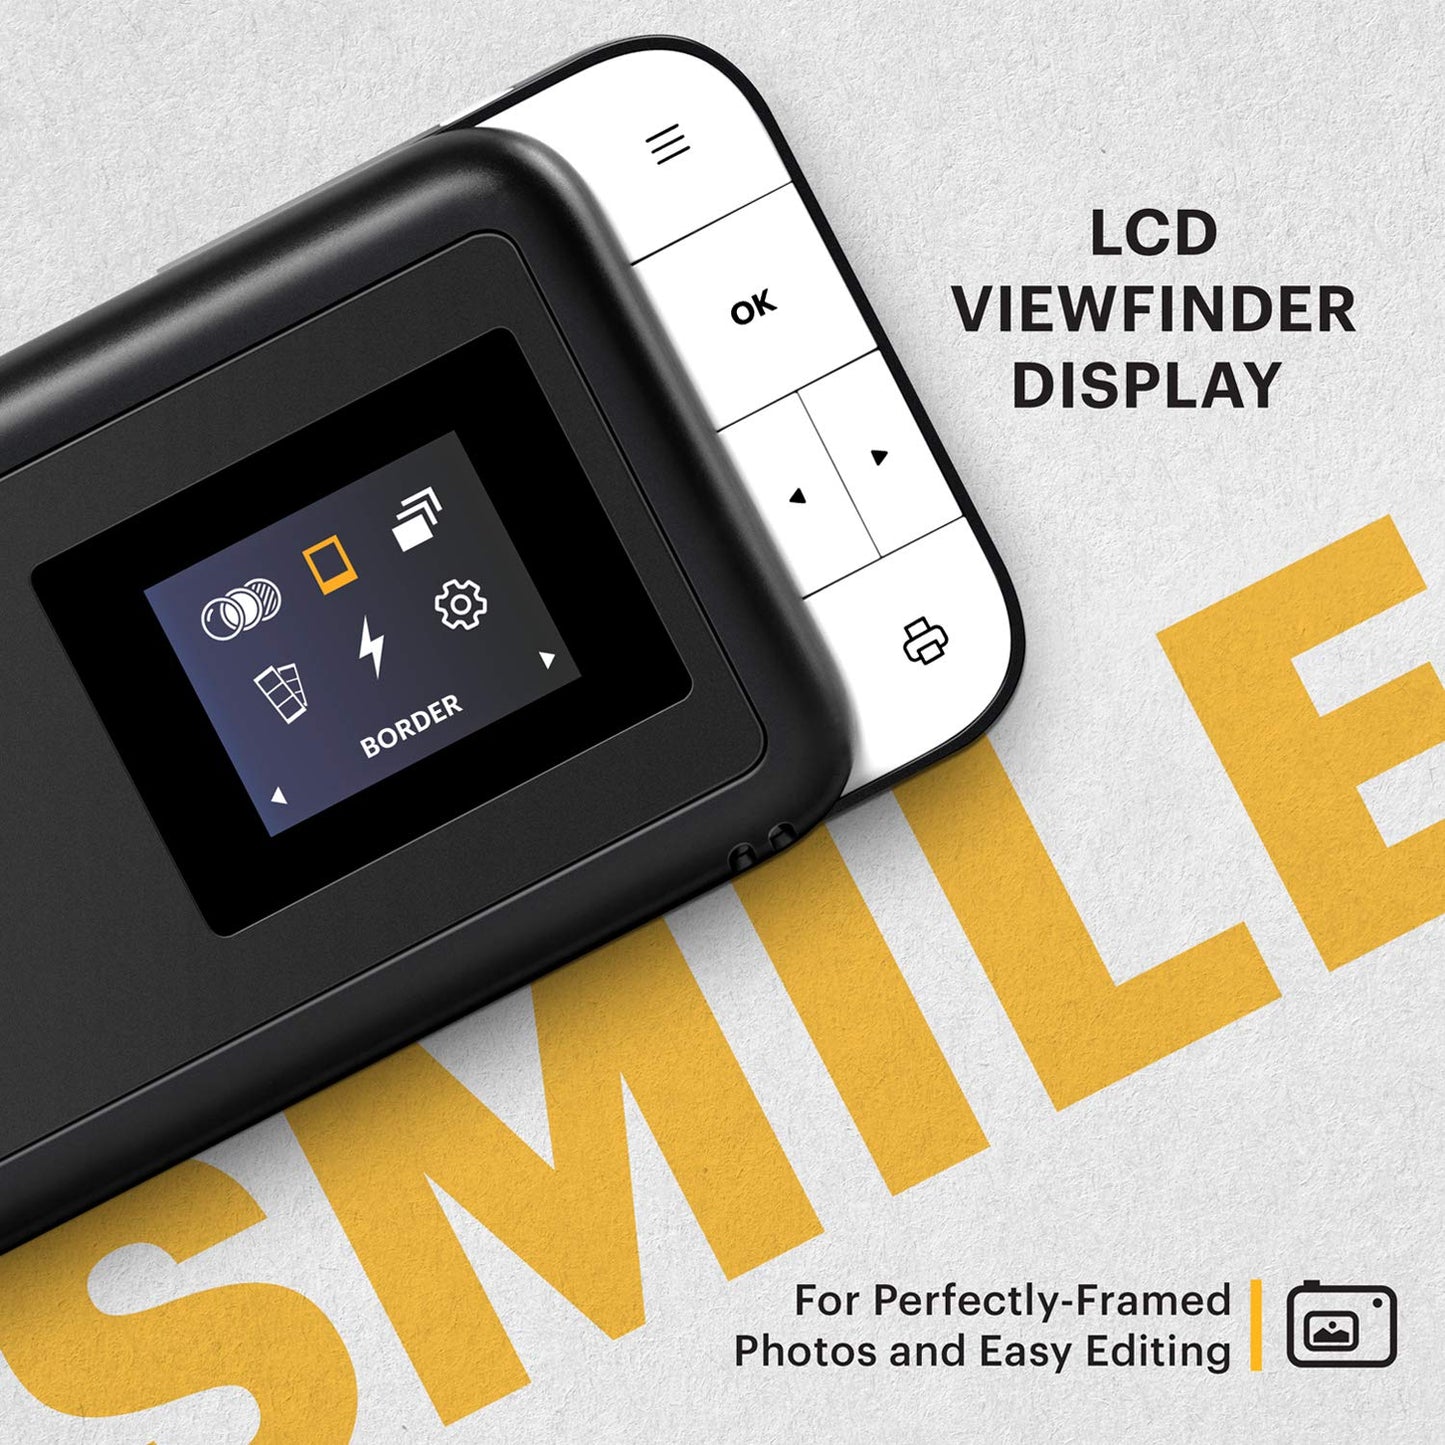 KODAK Smile Instant Print Digital Camera – Slide-Open 10MP Camera w/2x3 ZINK Printer, Screen, Fixed Focus, Auto Flash and Photo Editing – Black/White